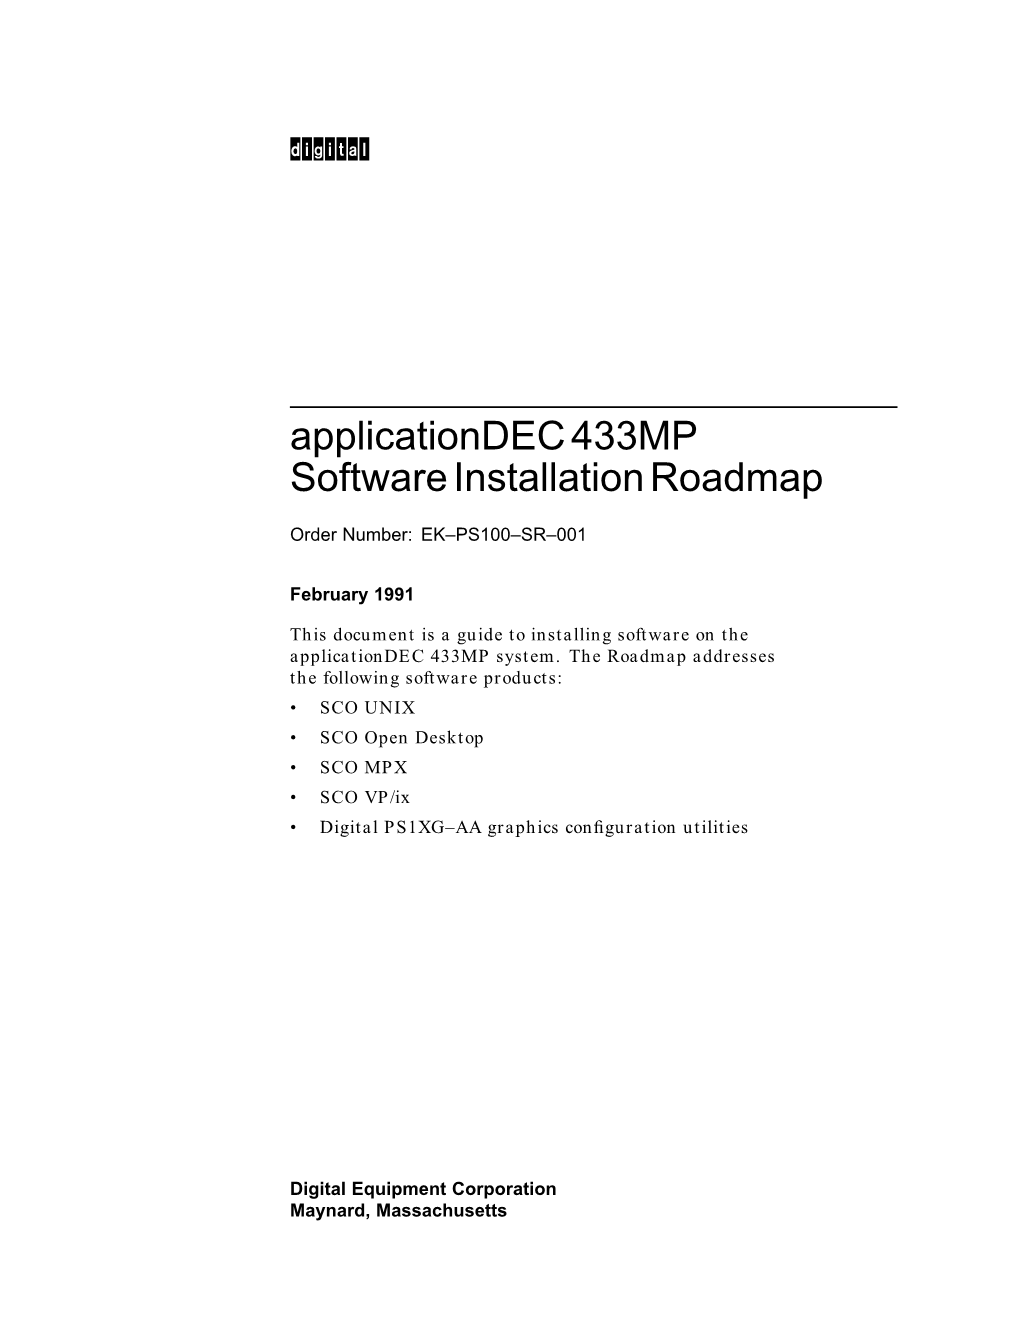 Applicationdec 433MP Software Installation Roadmap